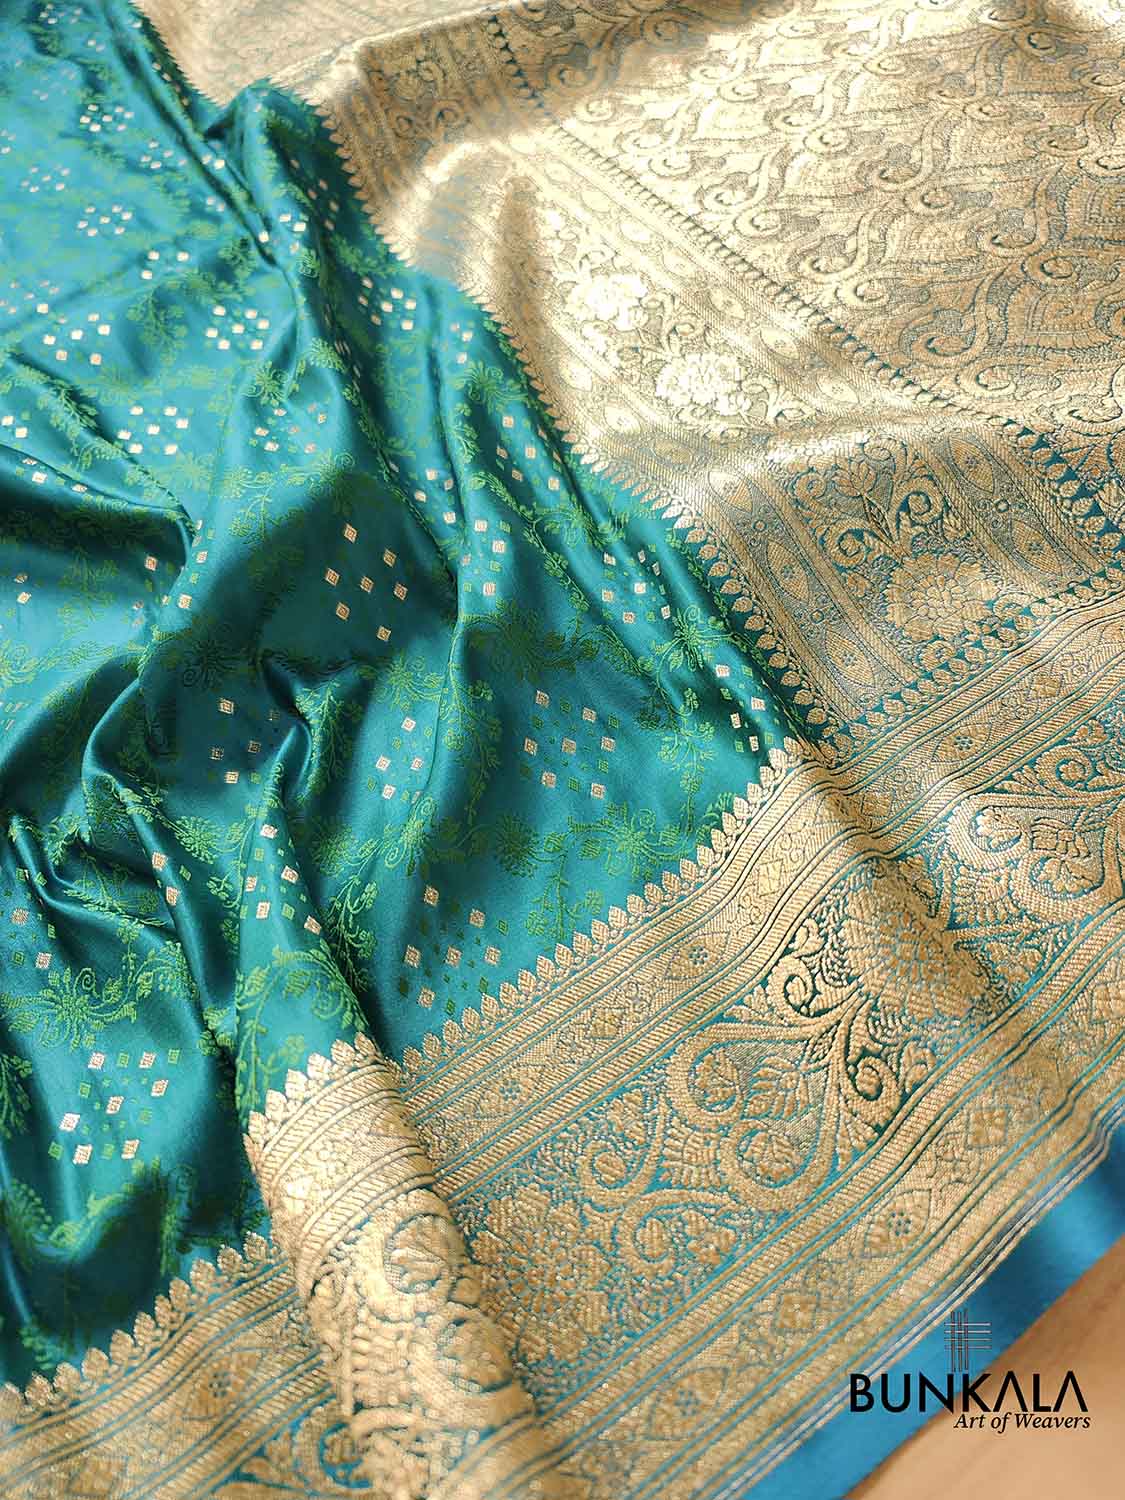 Green Two Tone Peacock Color Mashru Silk Jamewar Weaved Banarasi Saree